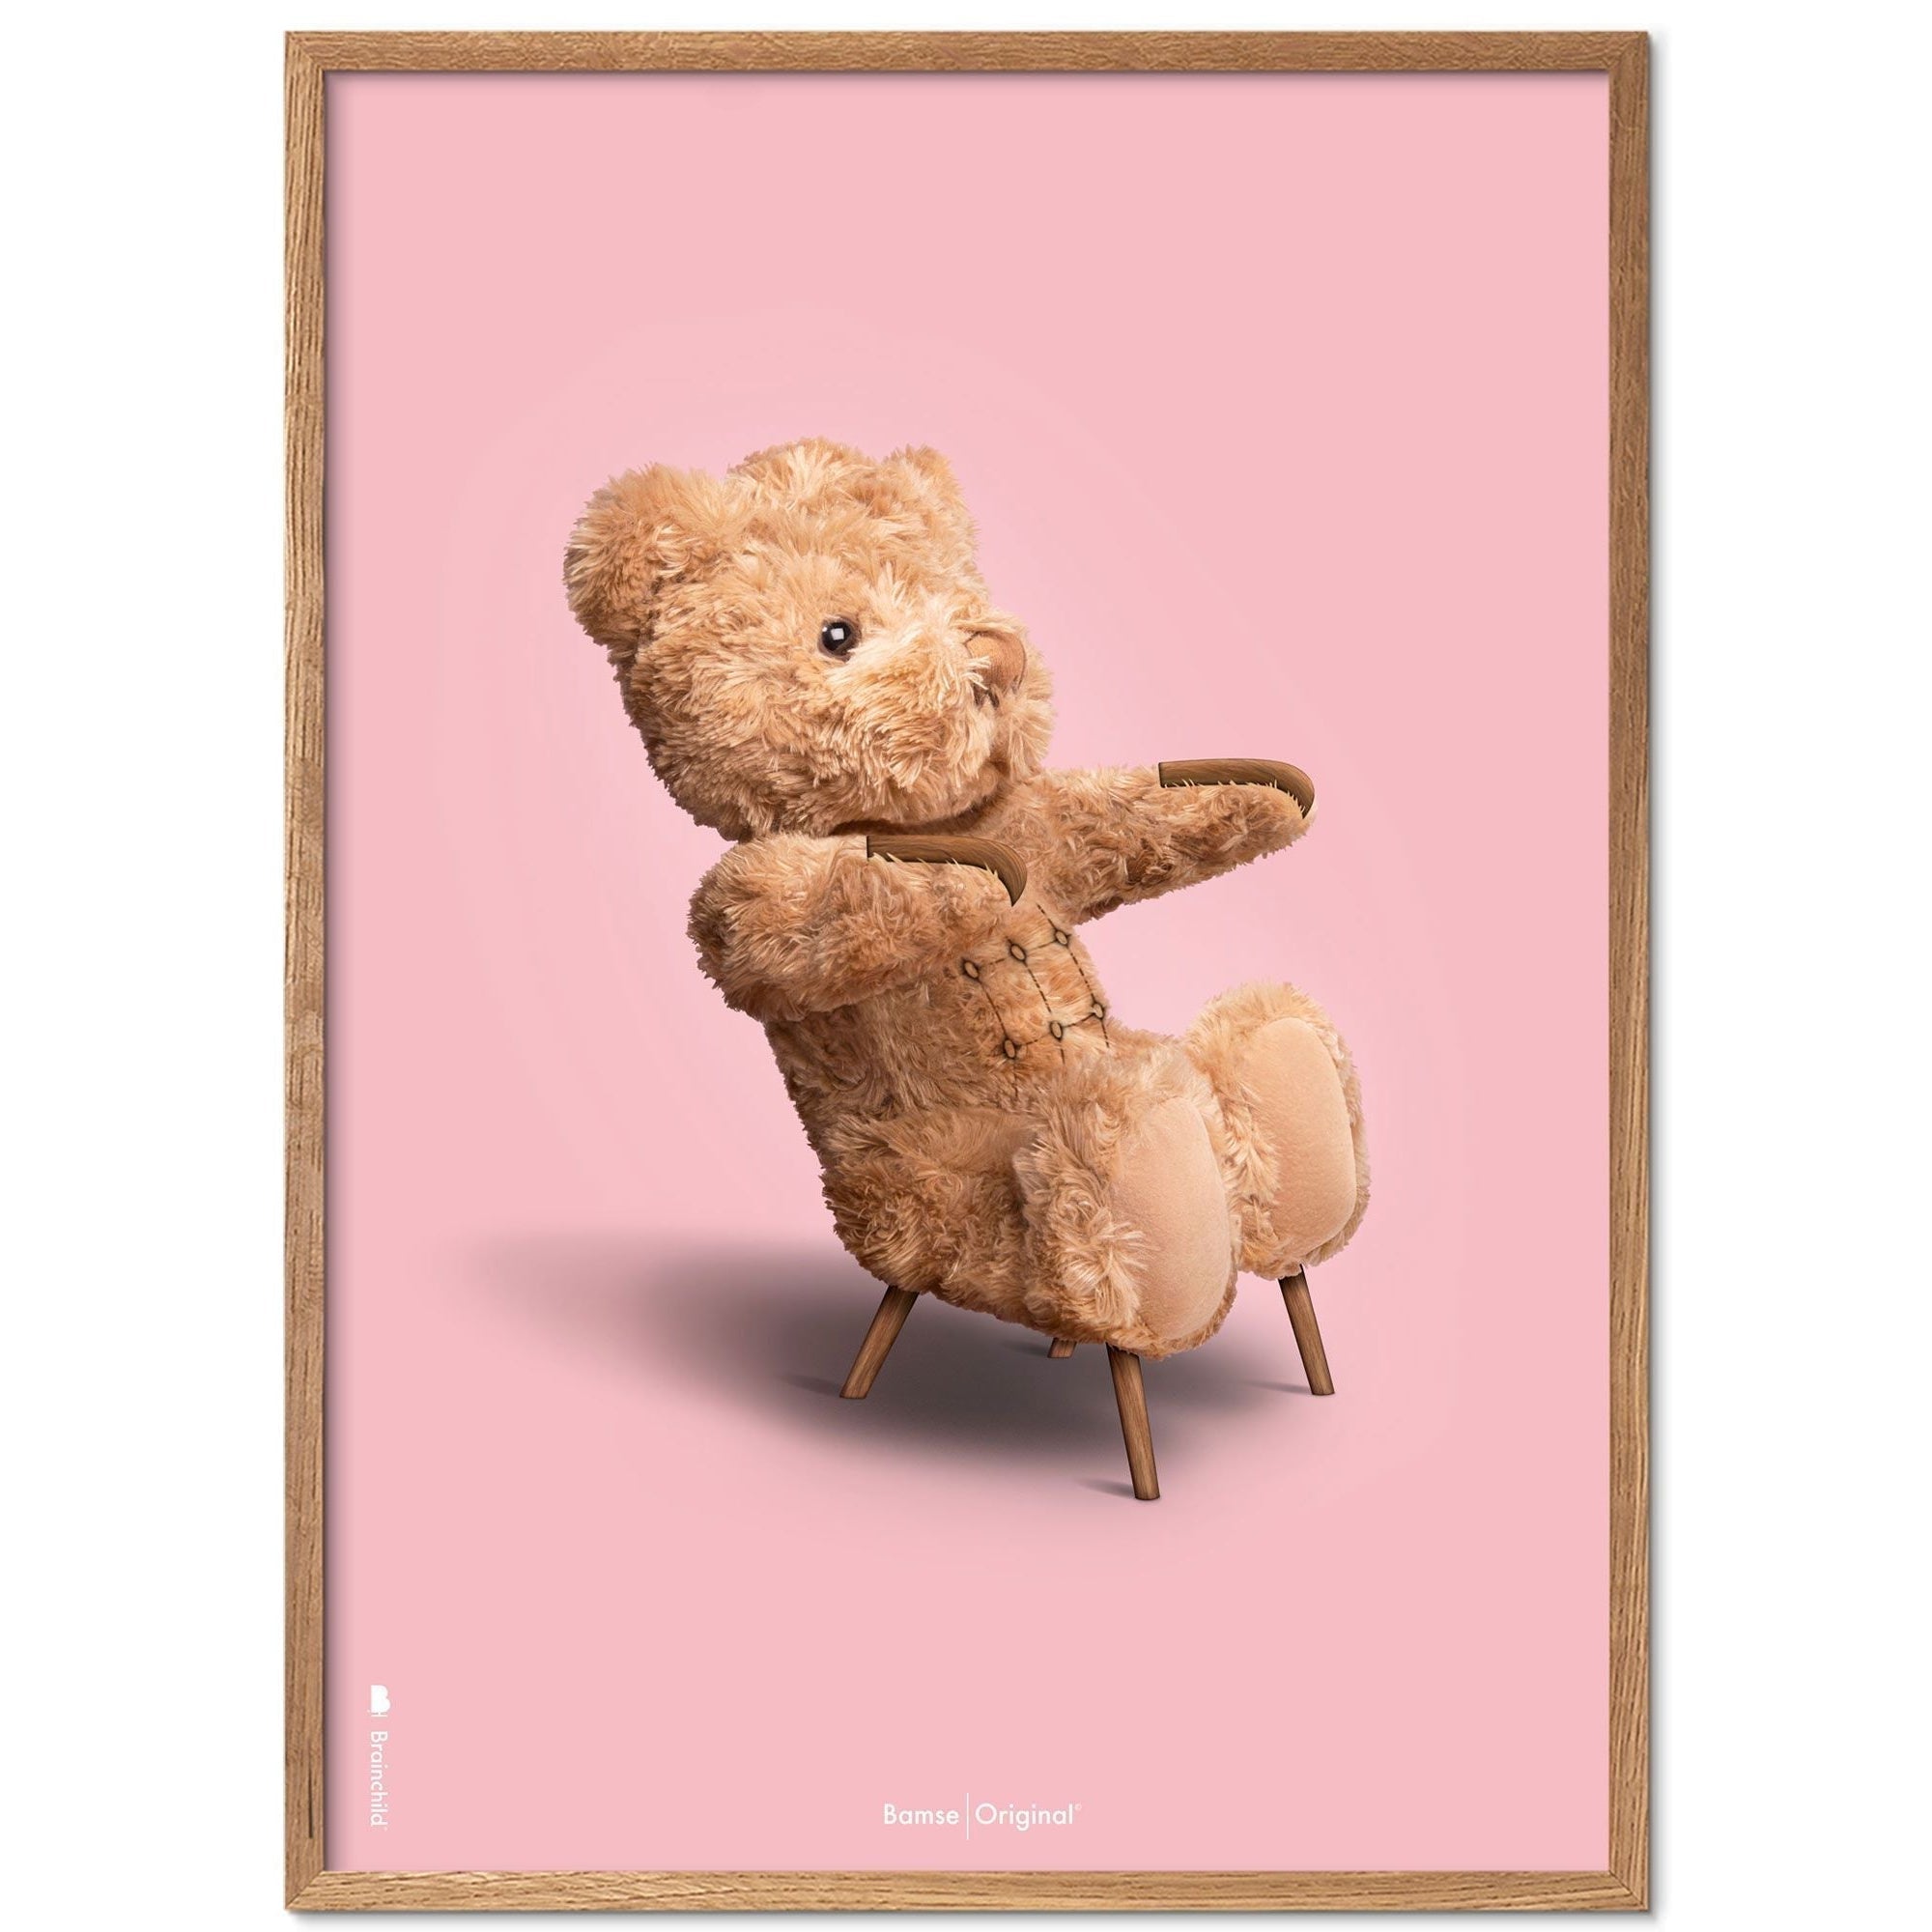 Brainchild Teddybeer klassiek poster frame gemaakt van licht hout ramme 30x40 cm, roze achtergrond